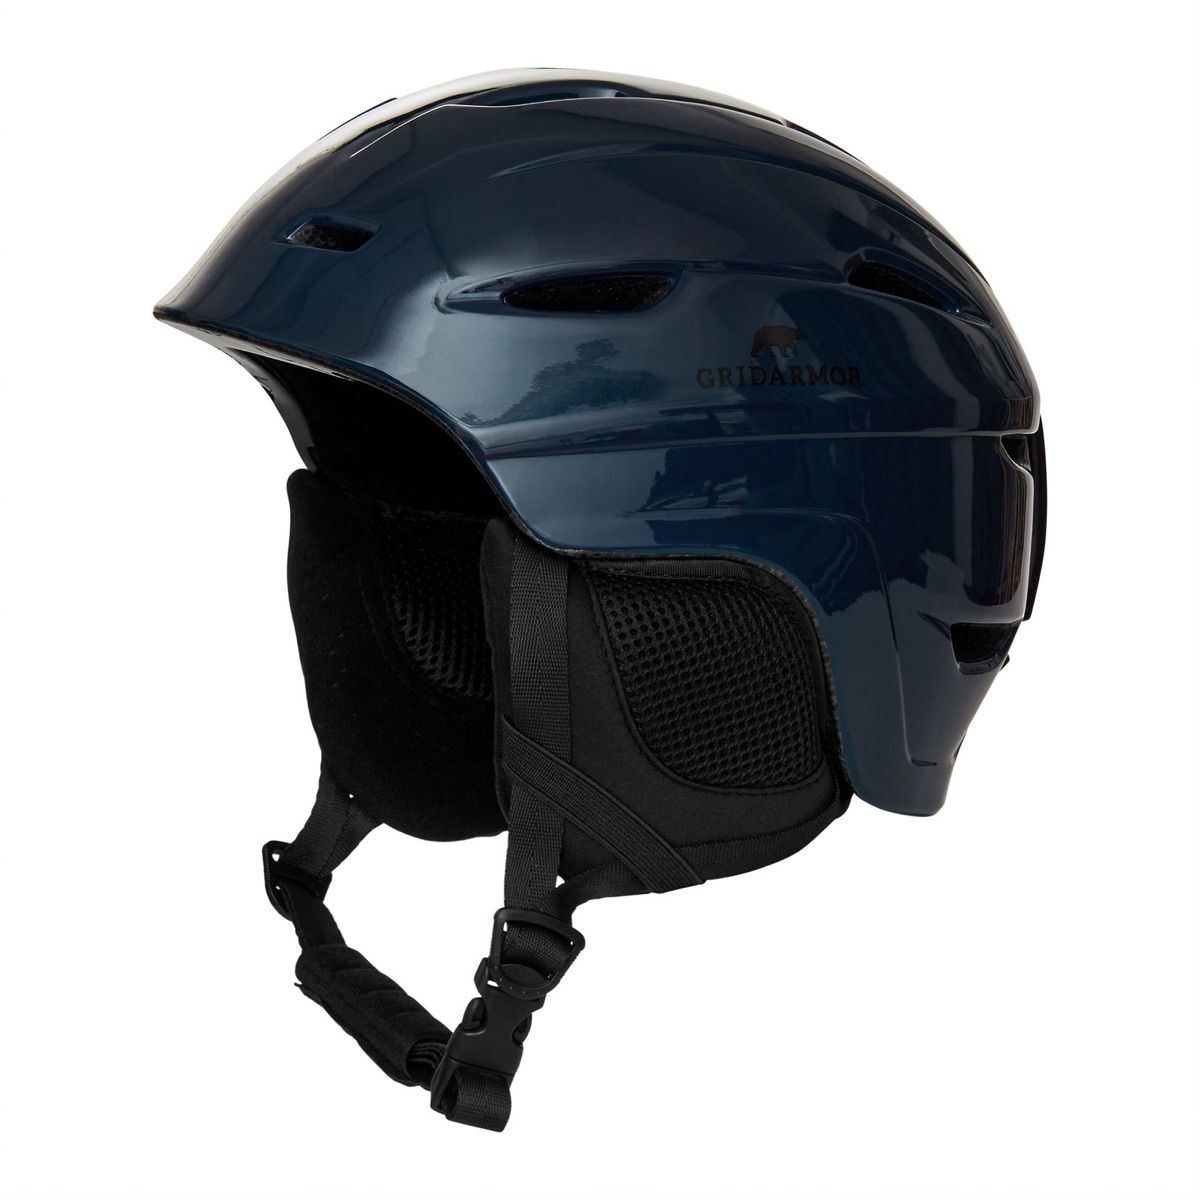 Gridarmor Kvittfjell Alpine Helmet Navy Blazer